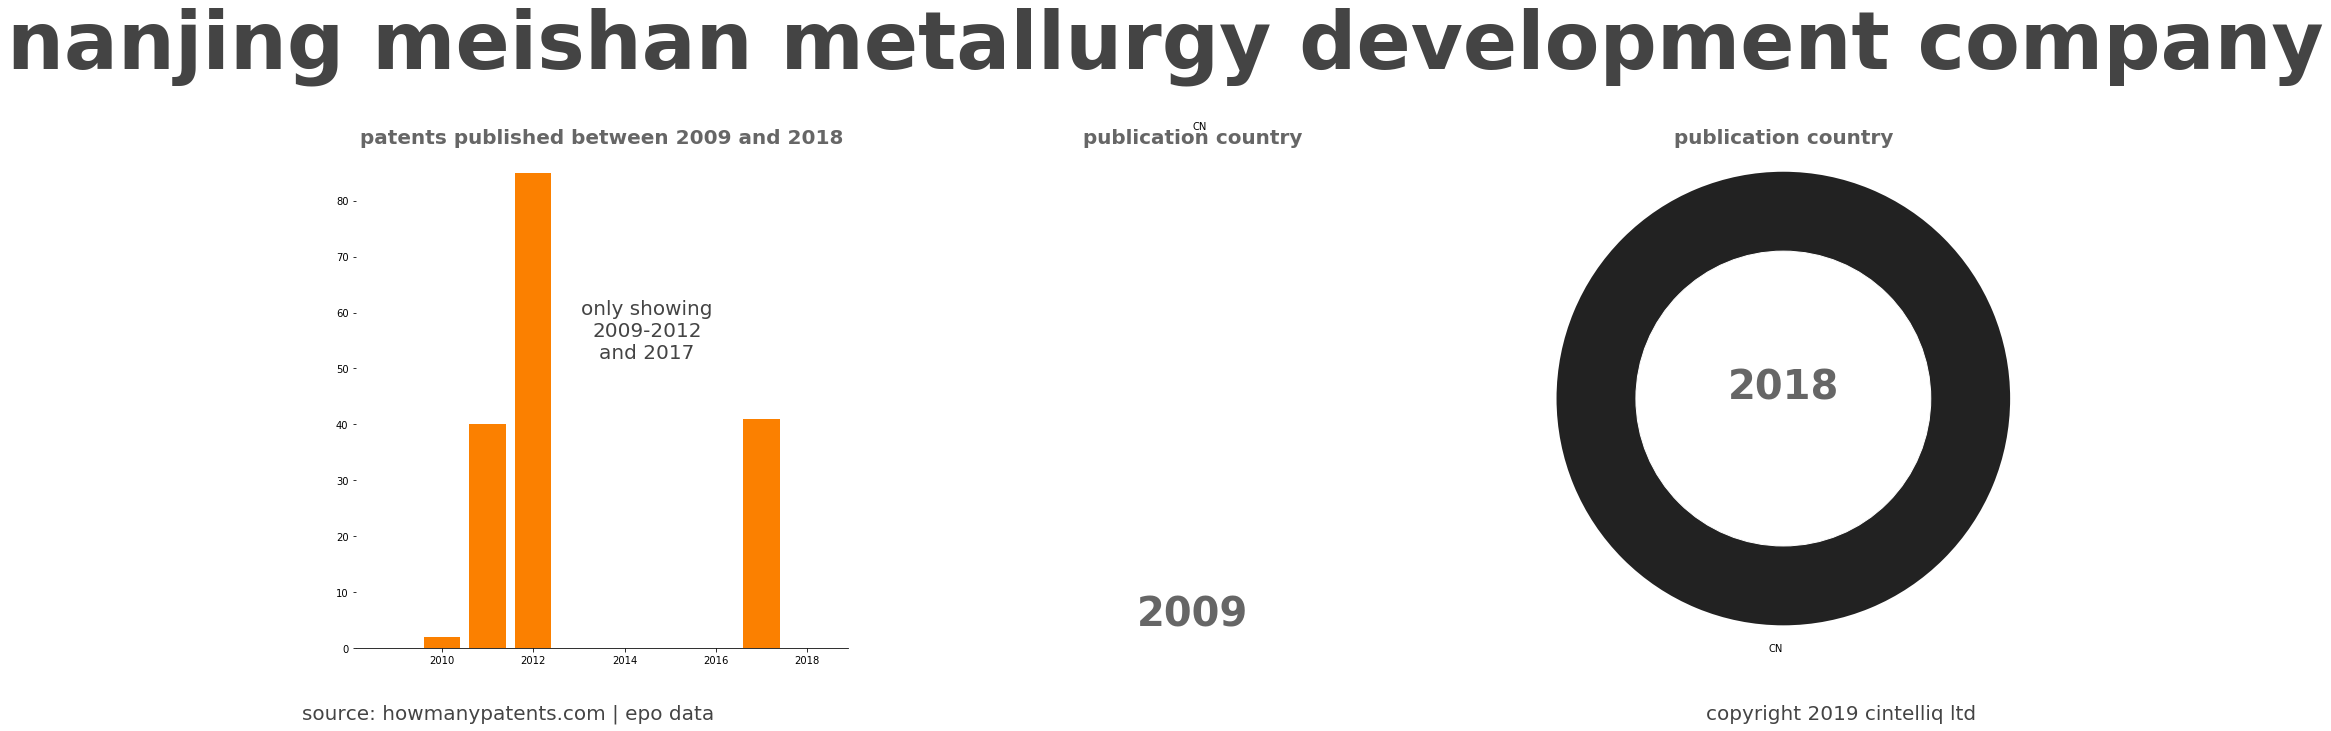 summary of patents for Nanjing Meishan Metallurgy Development Company